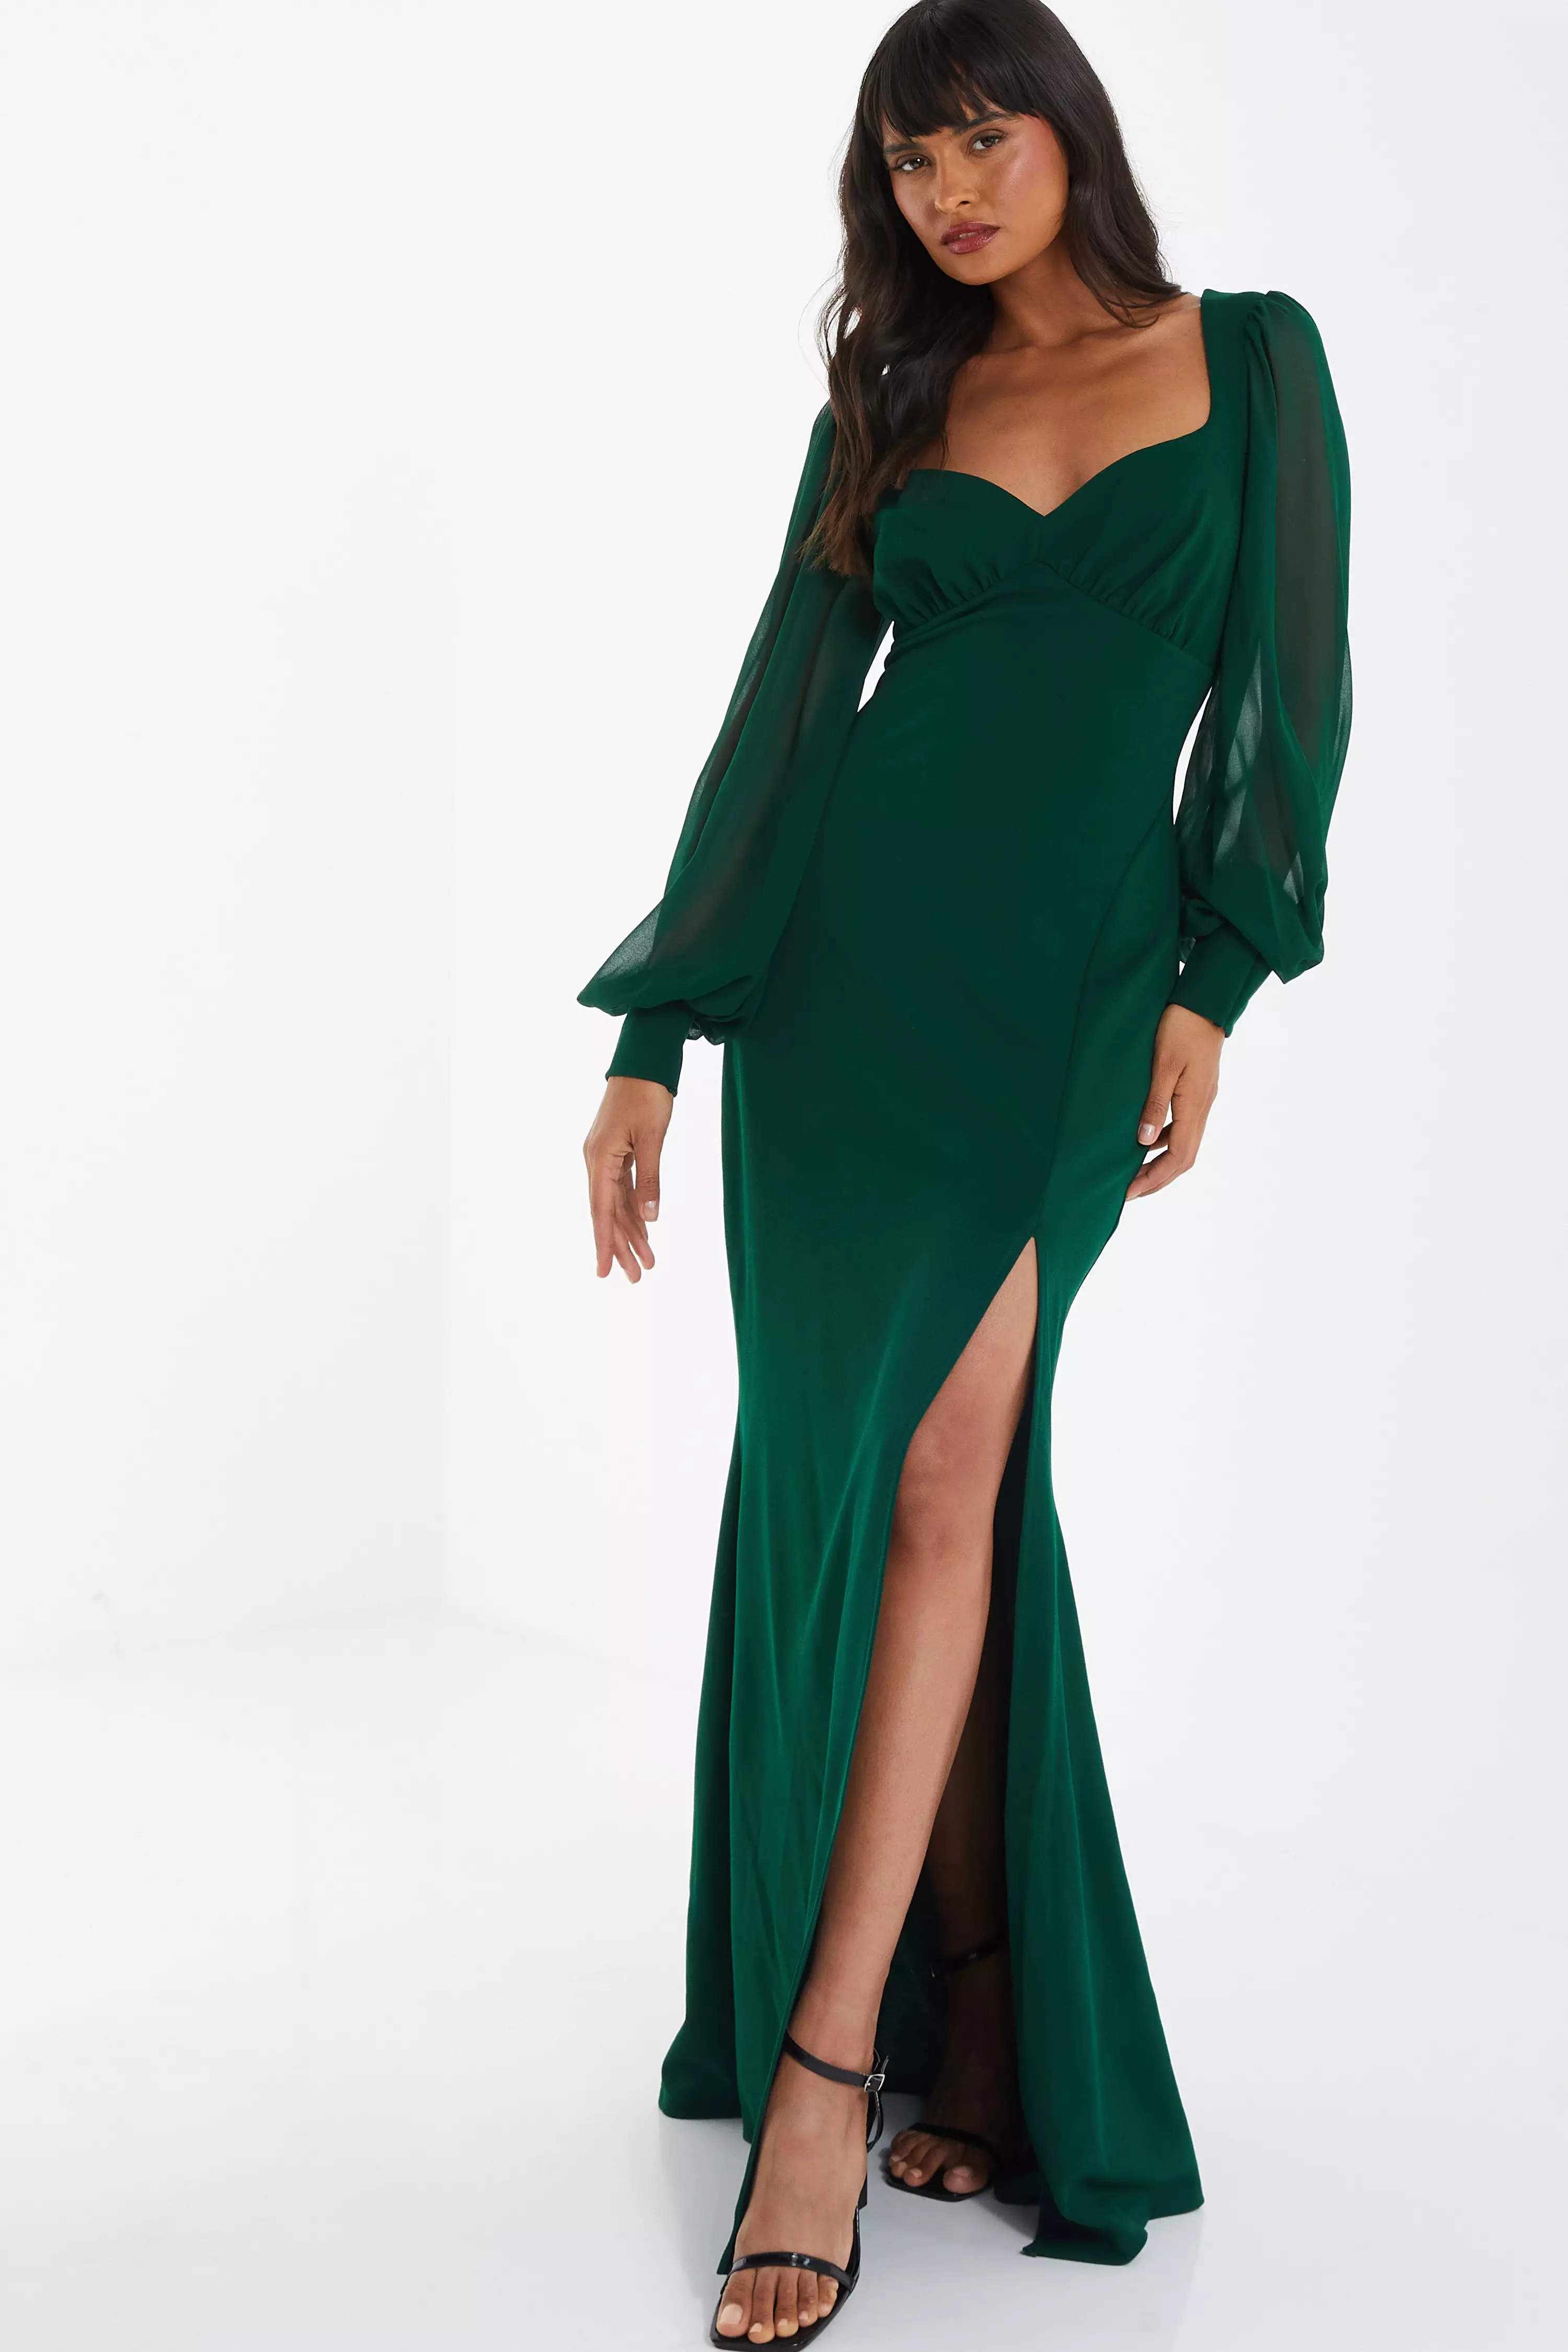 Green Chiffon Sleeve Maxi Dress - QUIZ Clothing